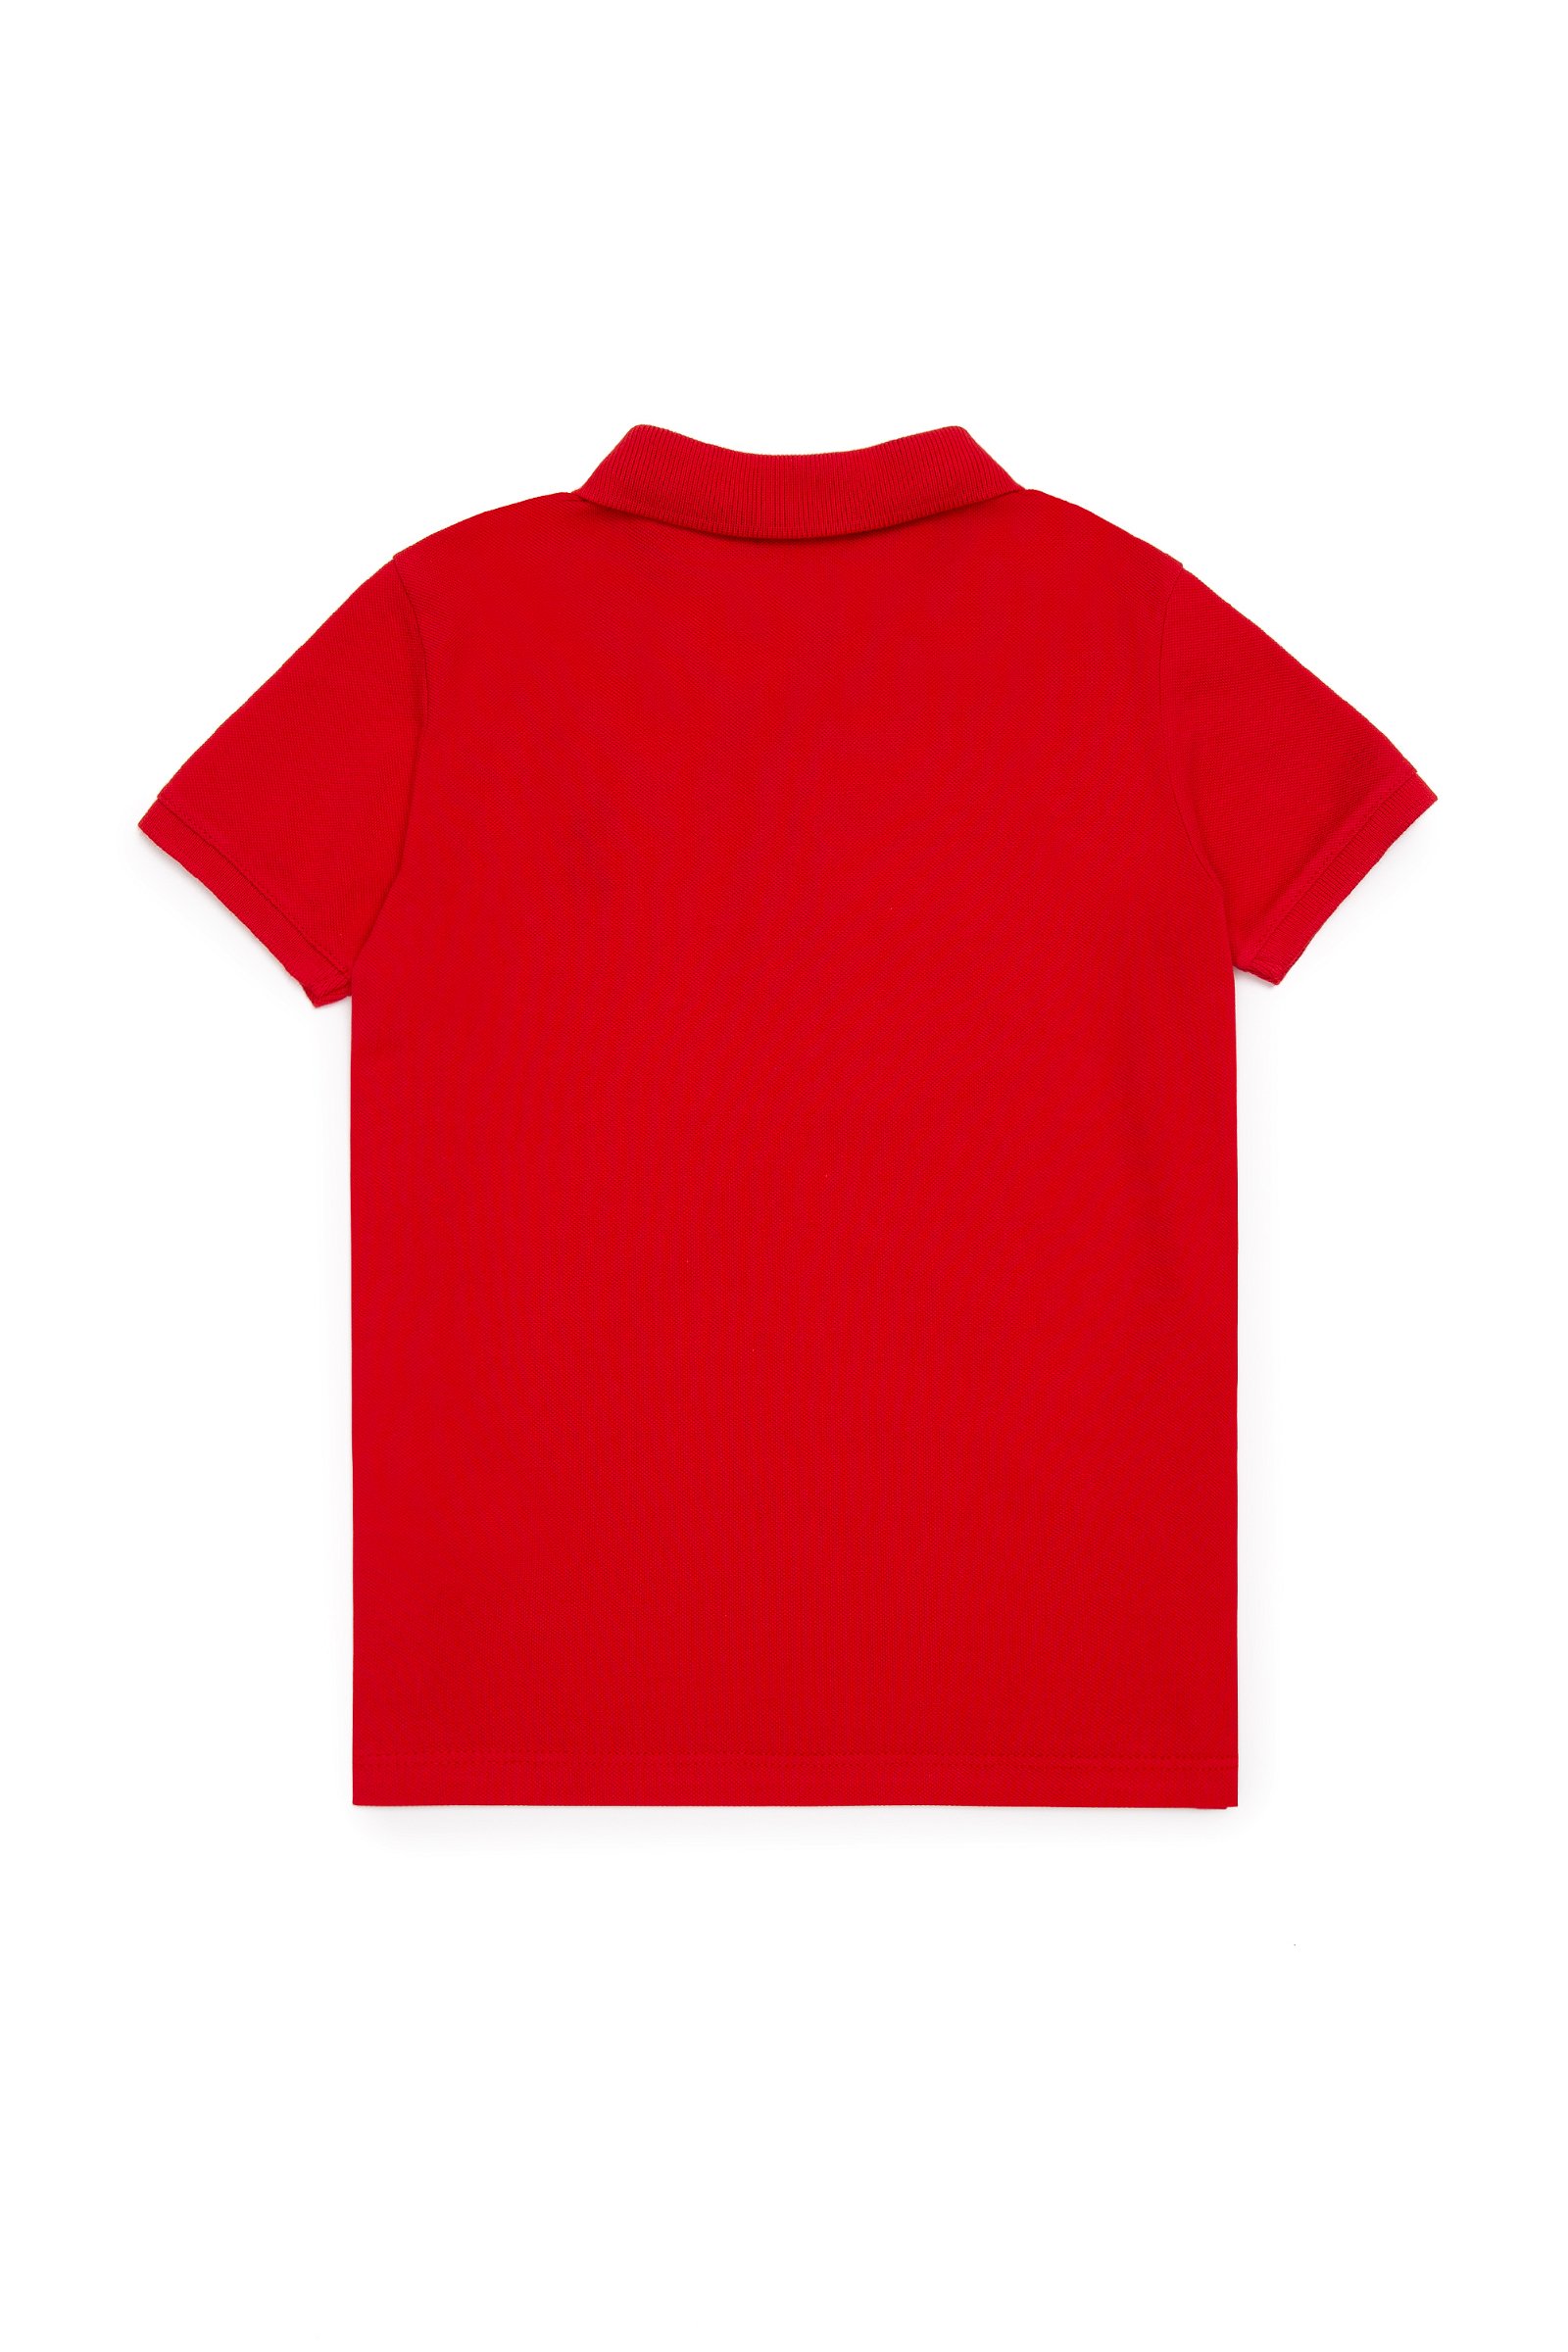 تی شرت یقه پولو قرمز  استاندارد فیت آستین کوتاه پسرانه یو اس پولو | US POLO ASSN